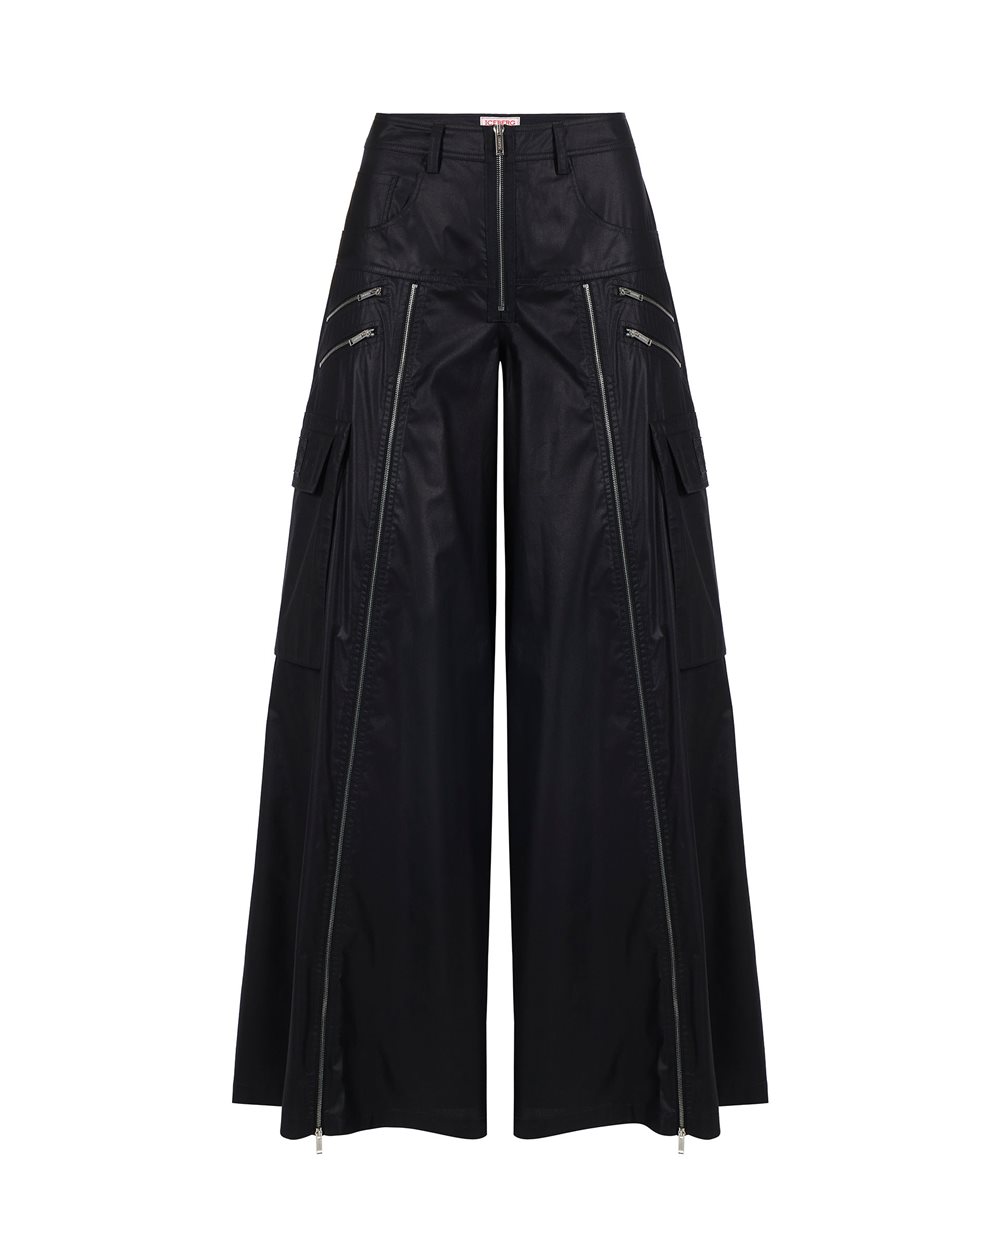 Pantalone a gamba larga con zip - Fashion Show Woman | Iceberg - Official Website